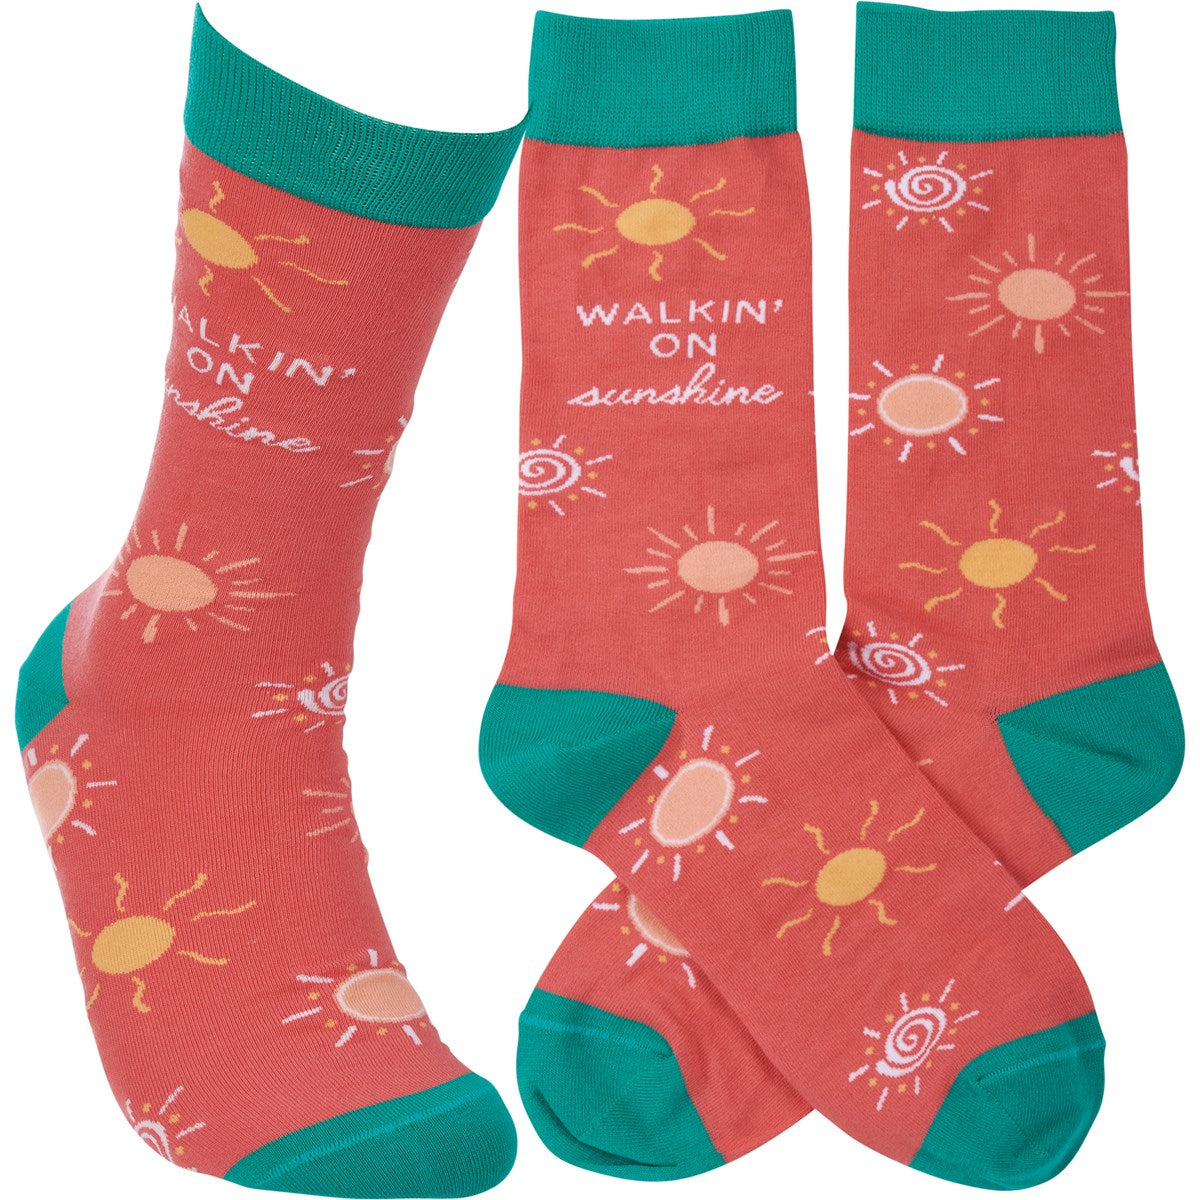 Orange & teal sock with "walking on sunshine"